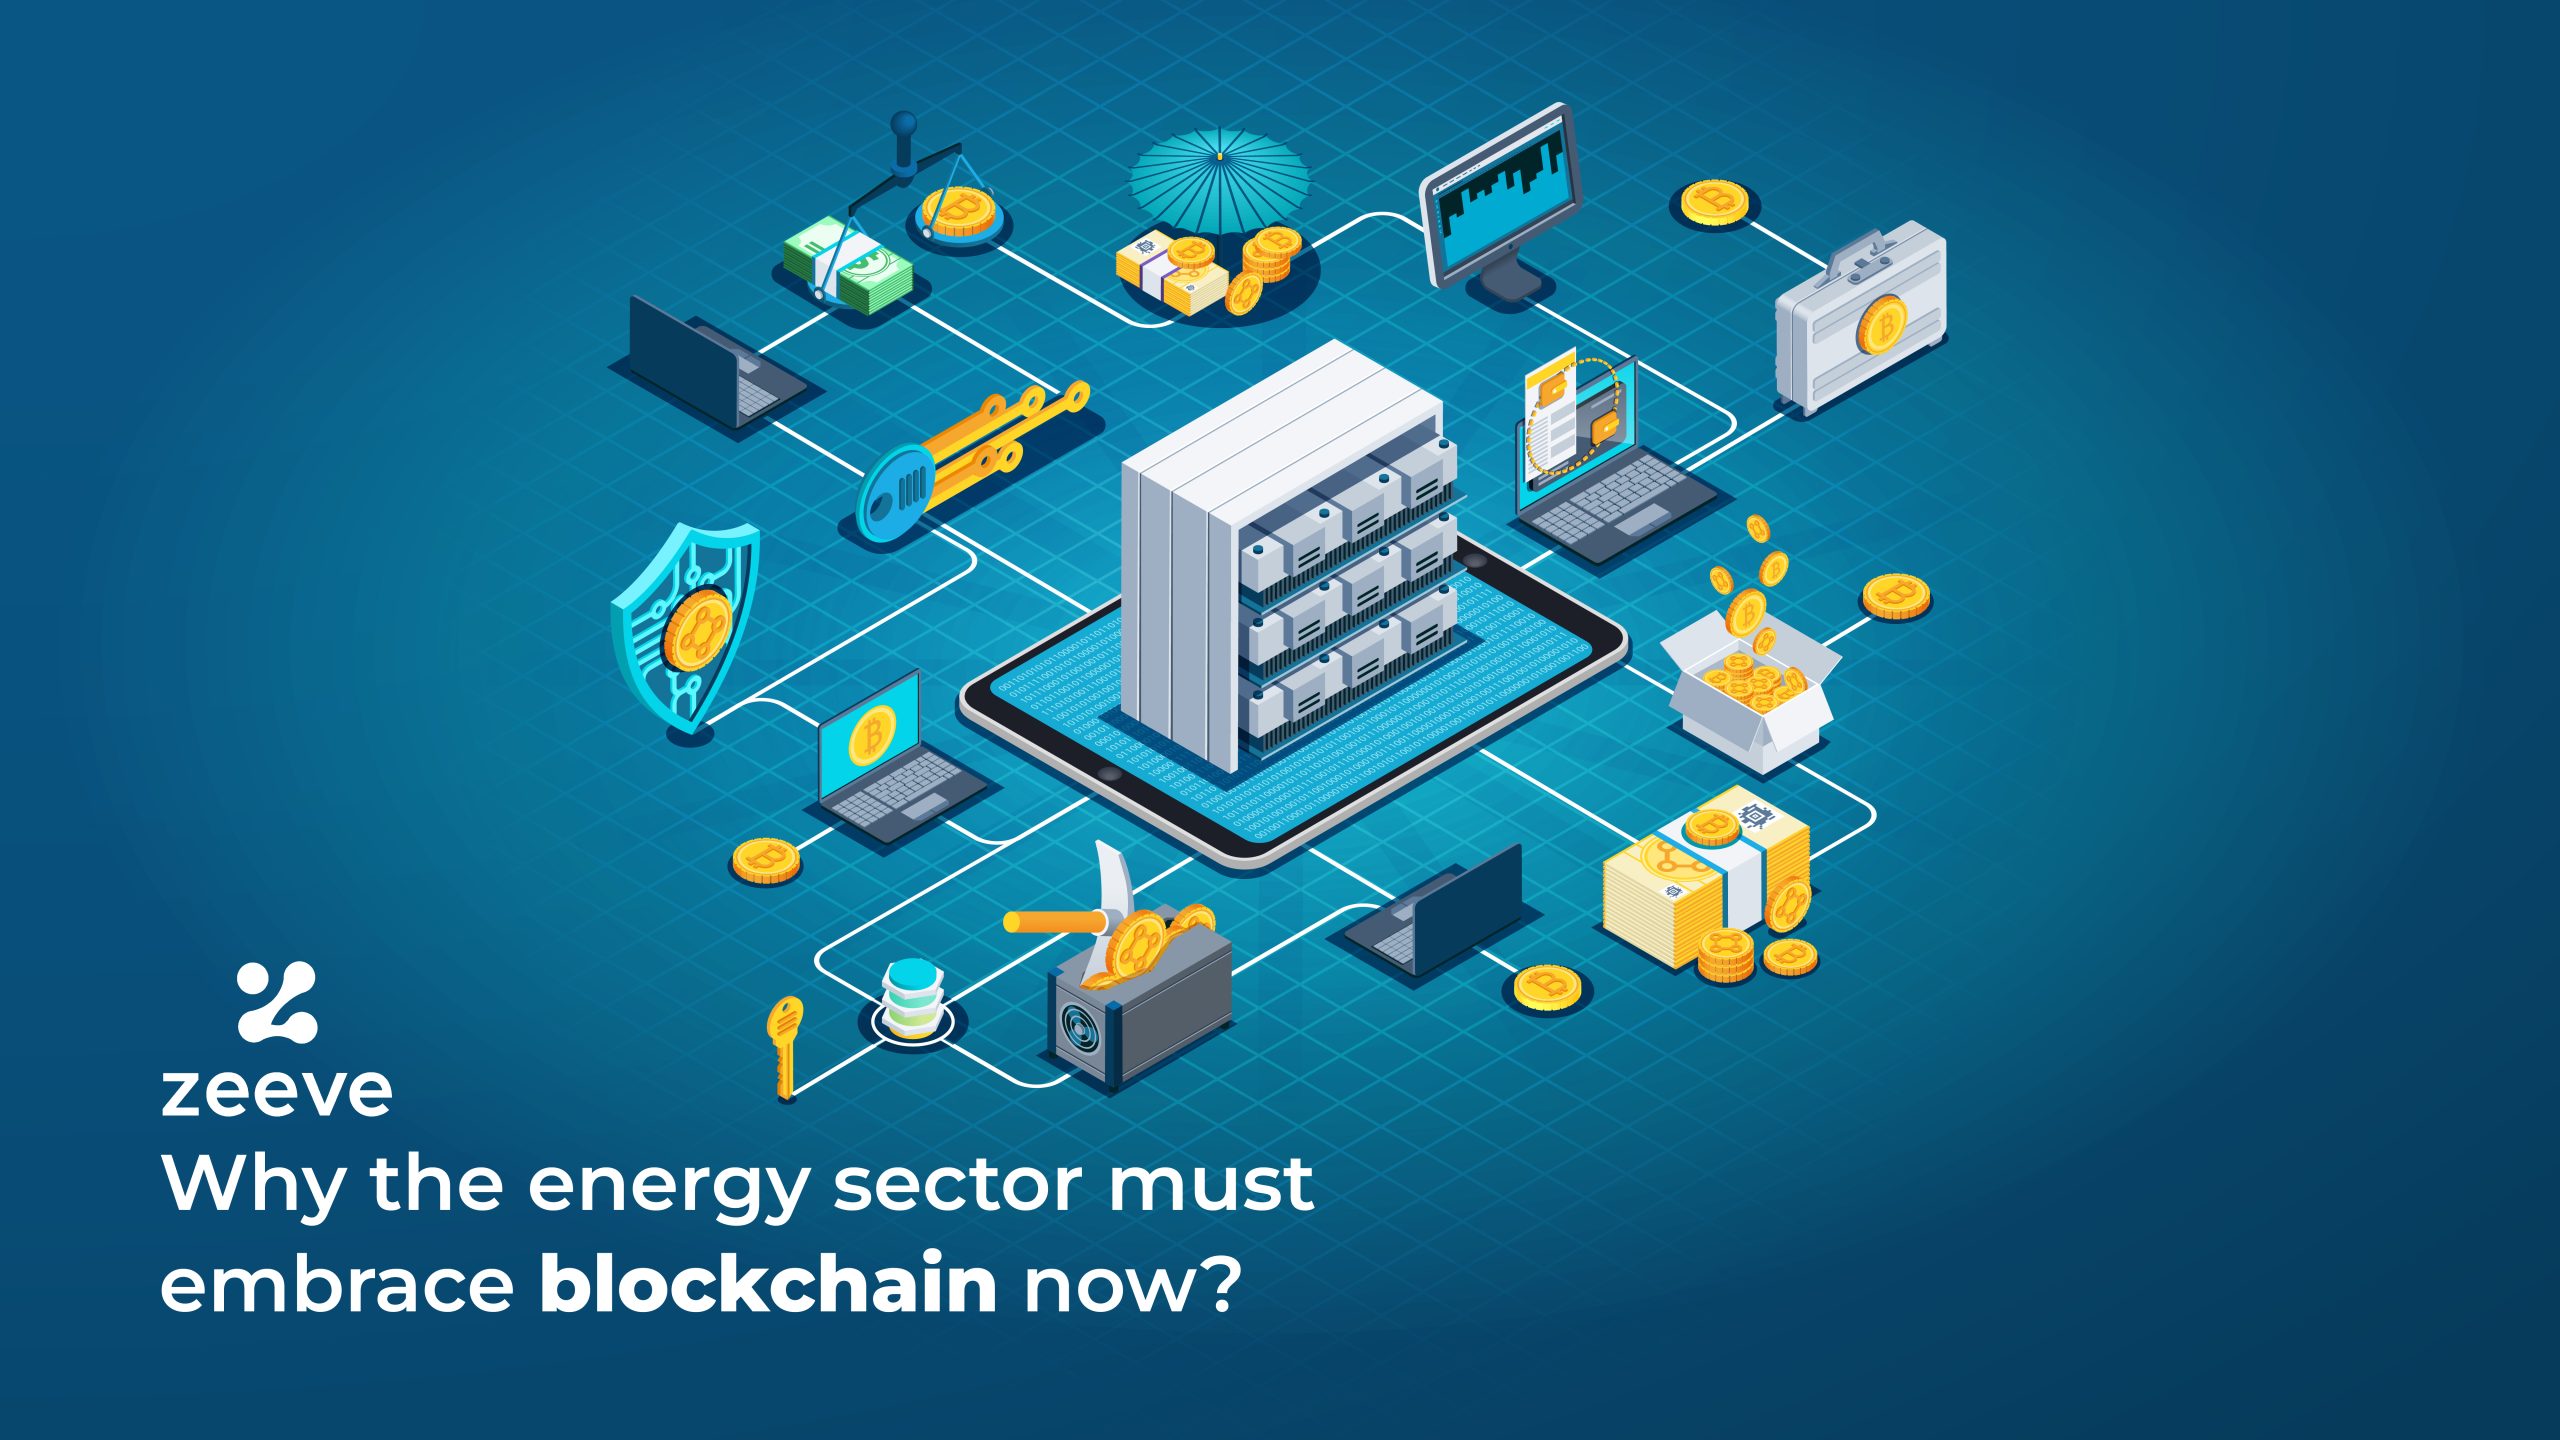 Benefits of blockchain in energy sector